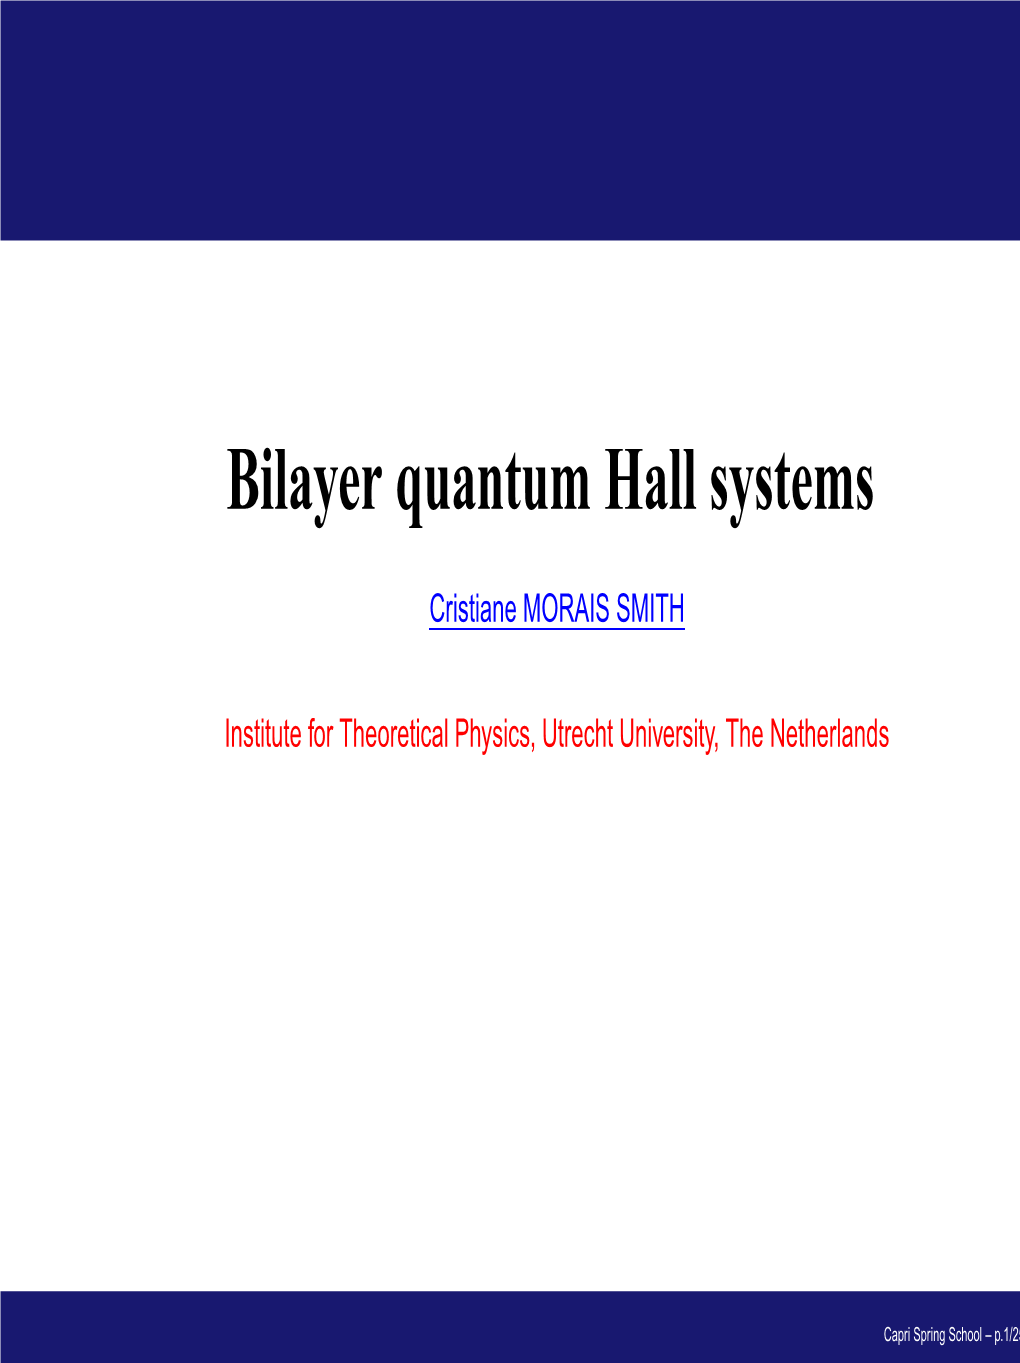 Bilayer Quantum Hall Systems